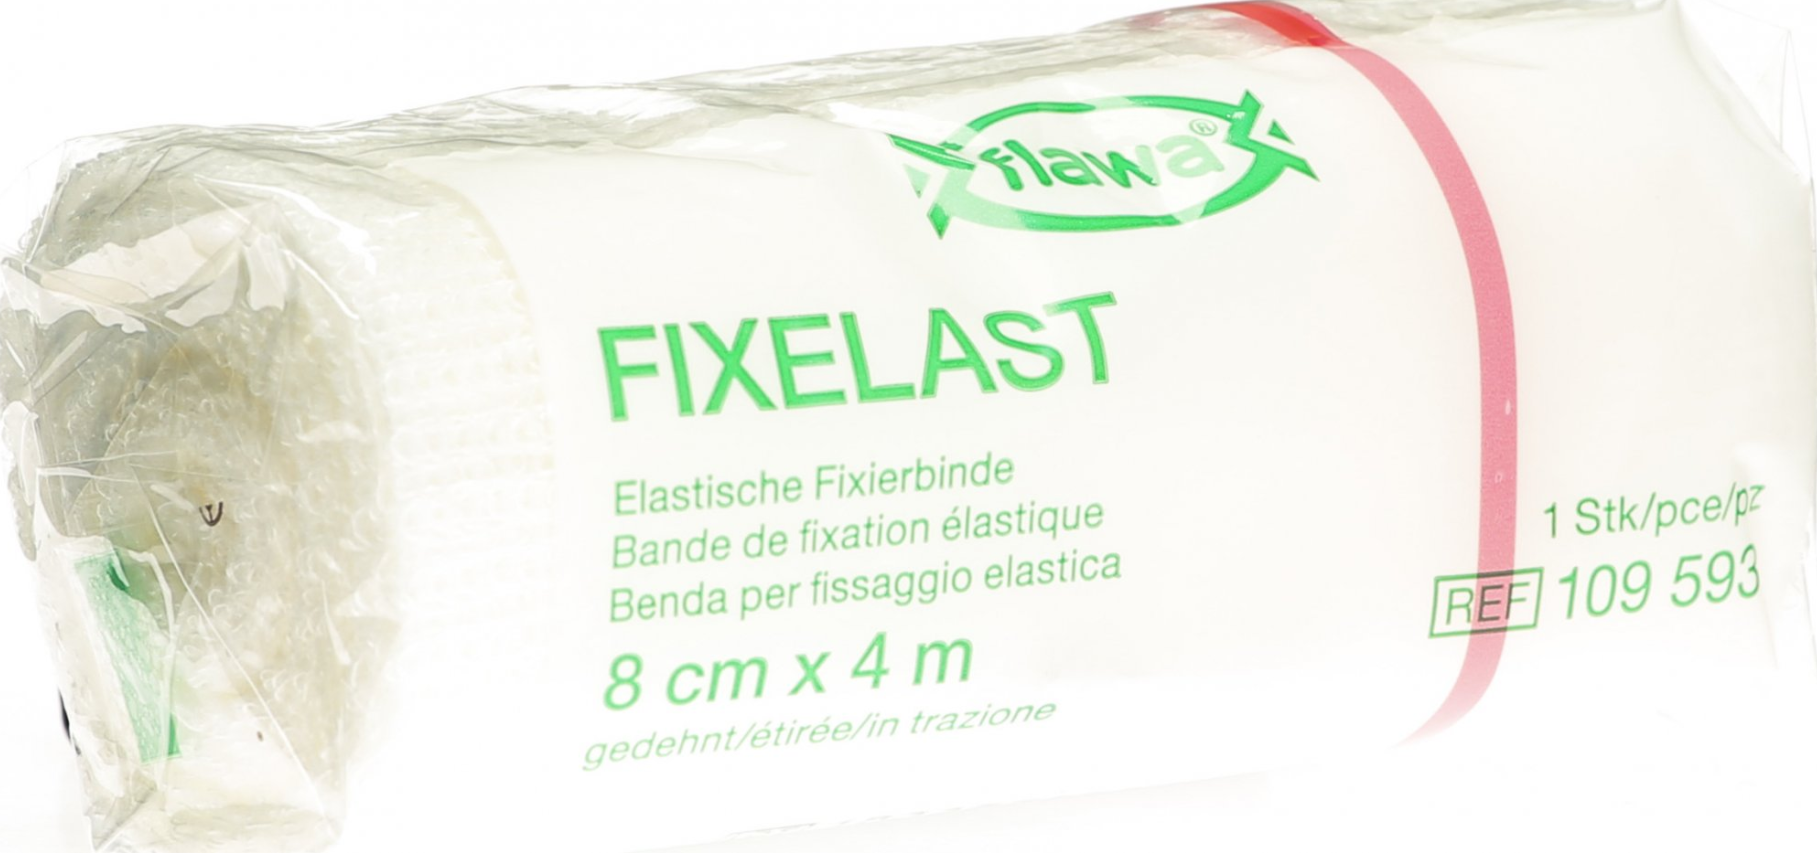 Image of FLAWA Fixelast Fixierbinde 8cmx4m (20 Stk)